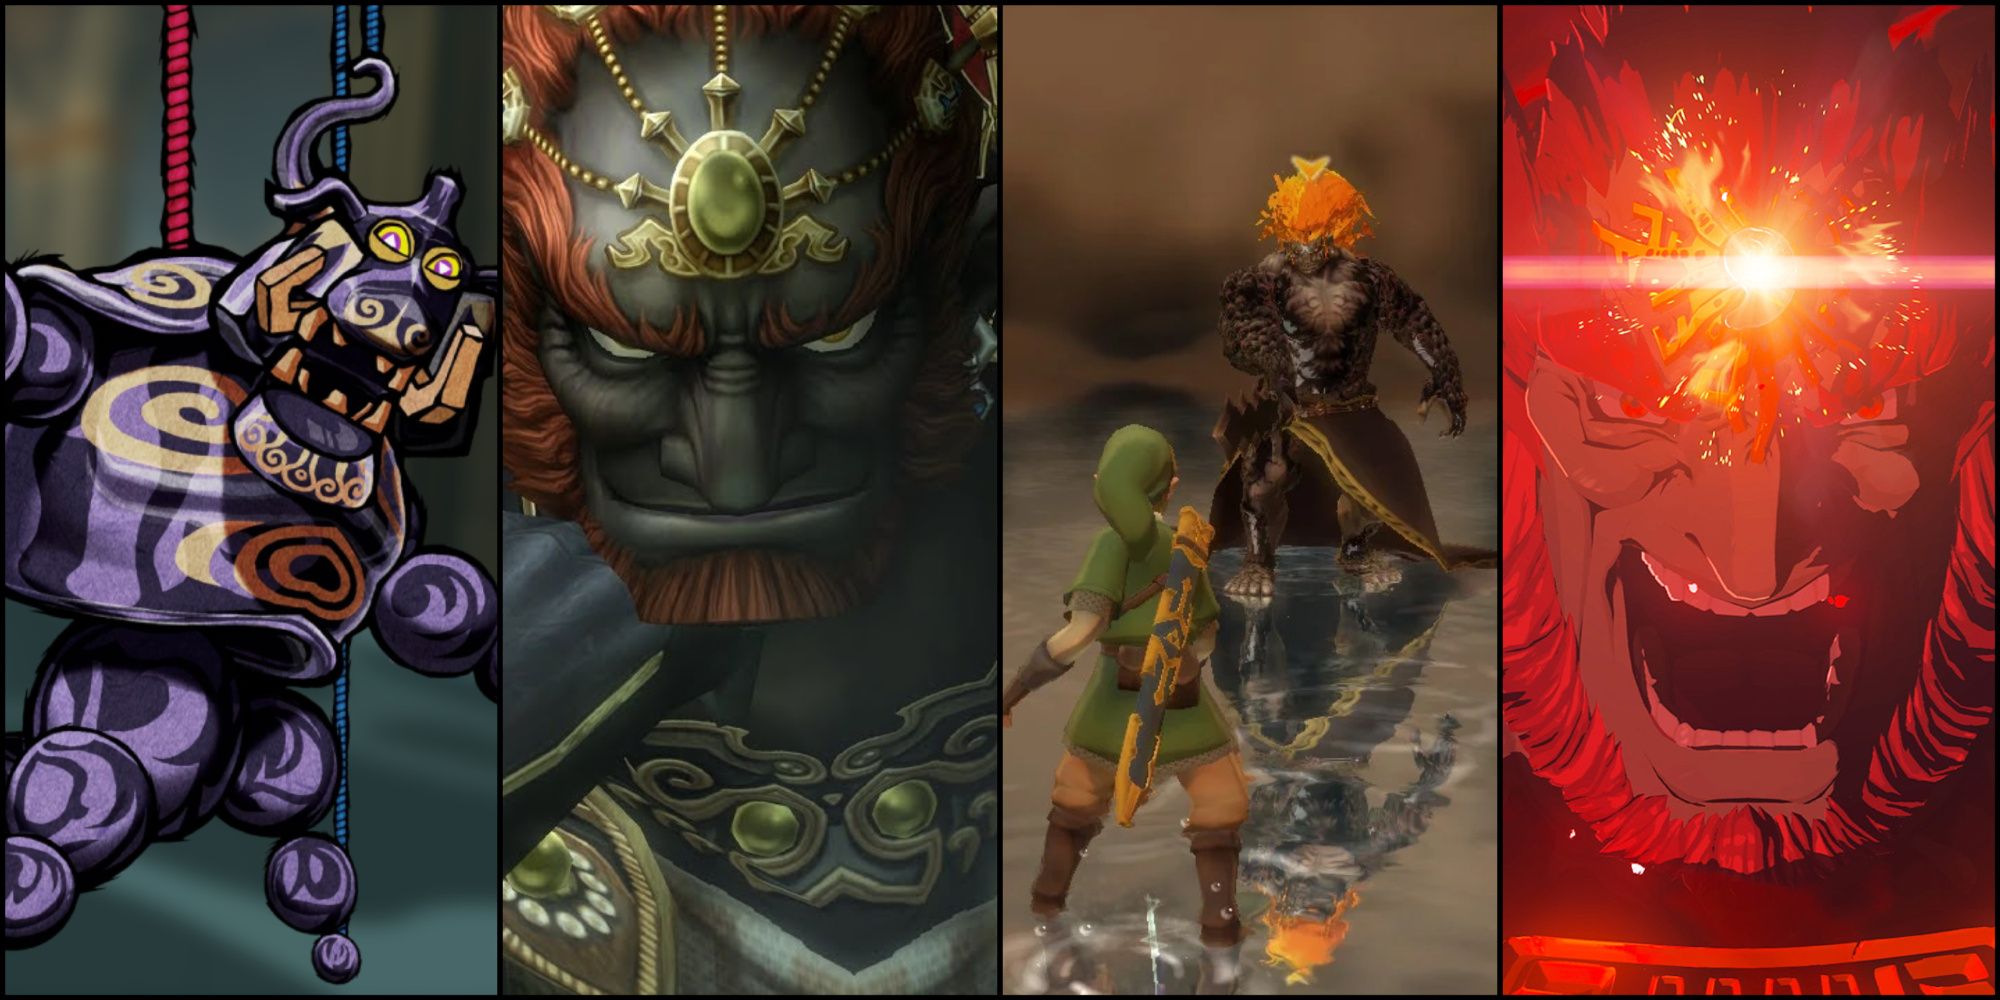 Puppet Ganon, Ganondorf, Demise, and Ganondorf from the Legend of Zelda series